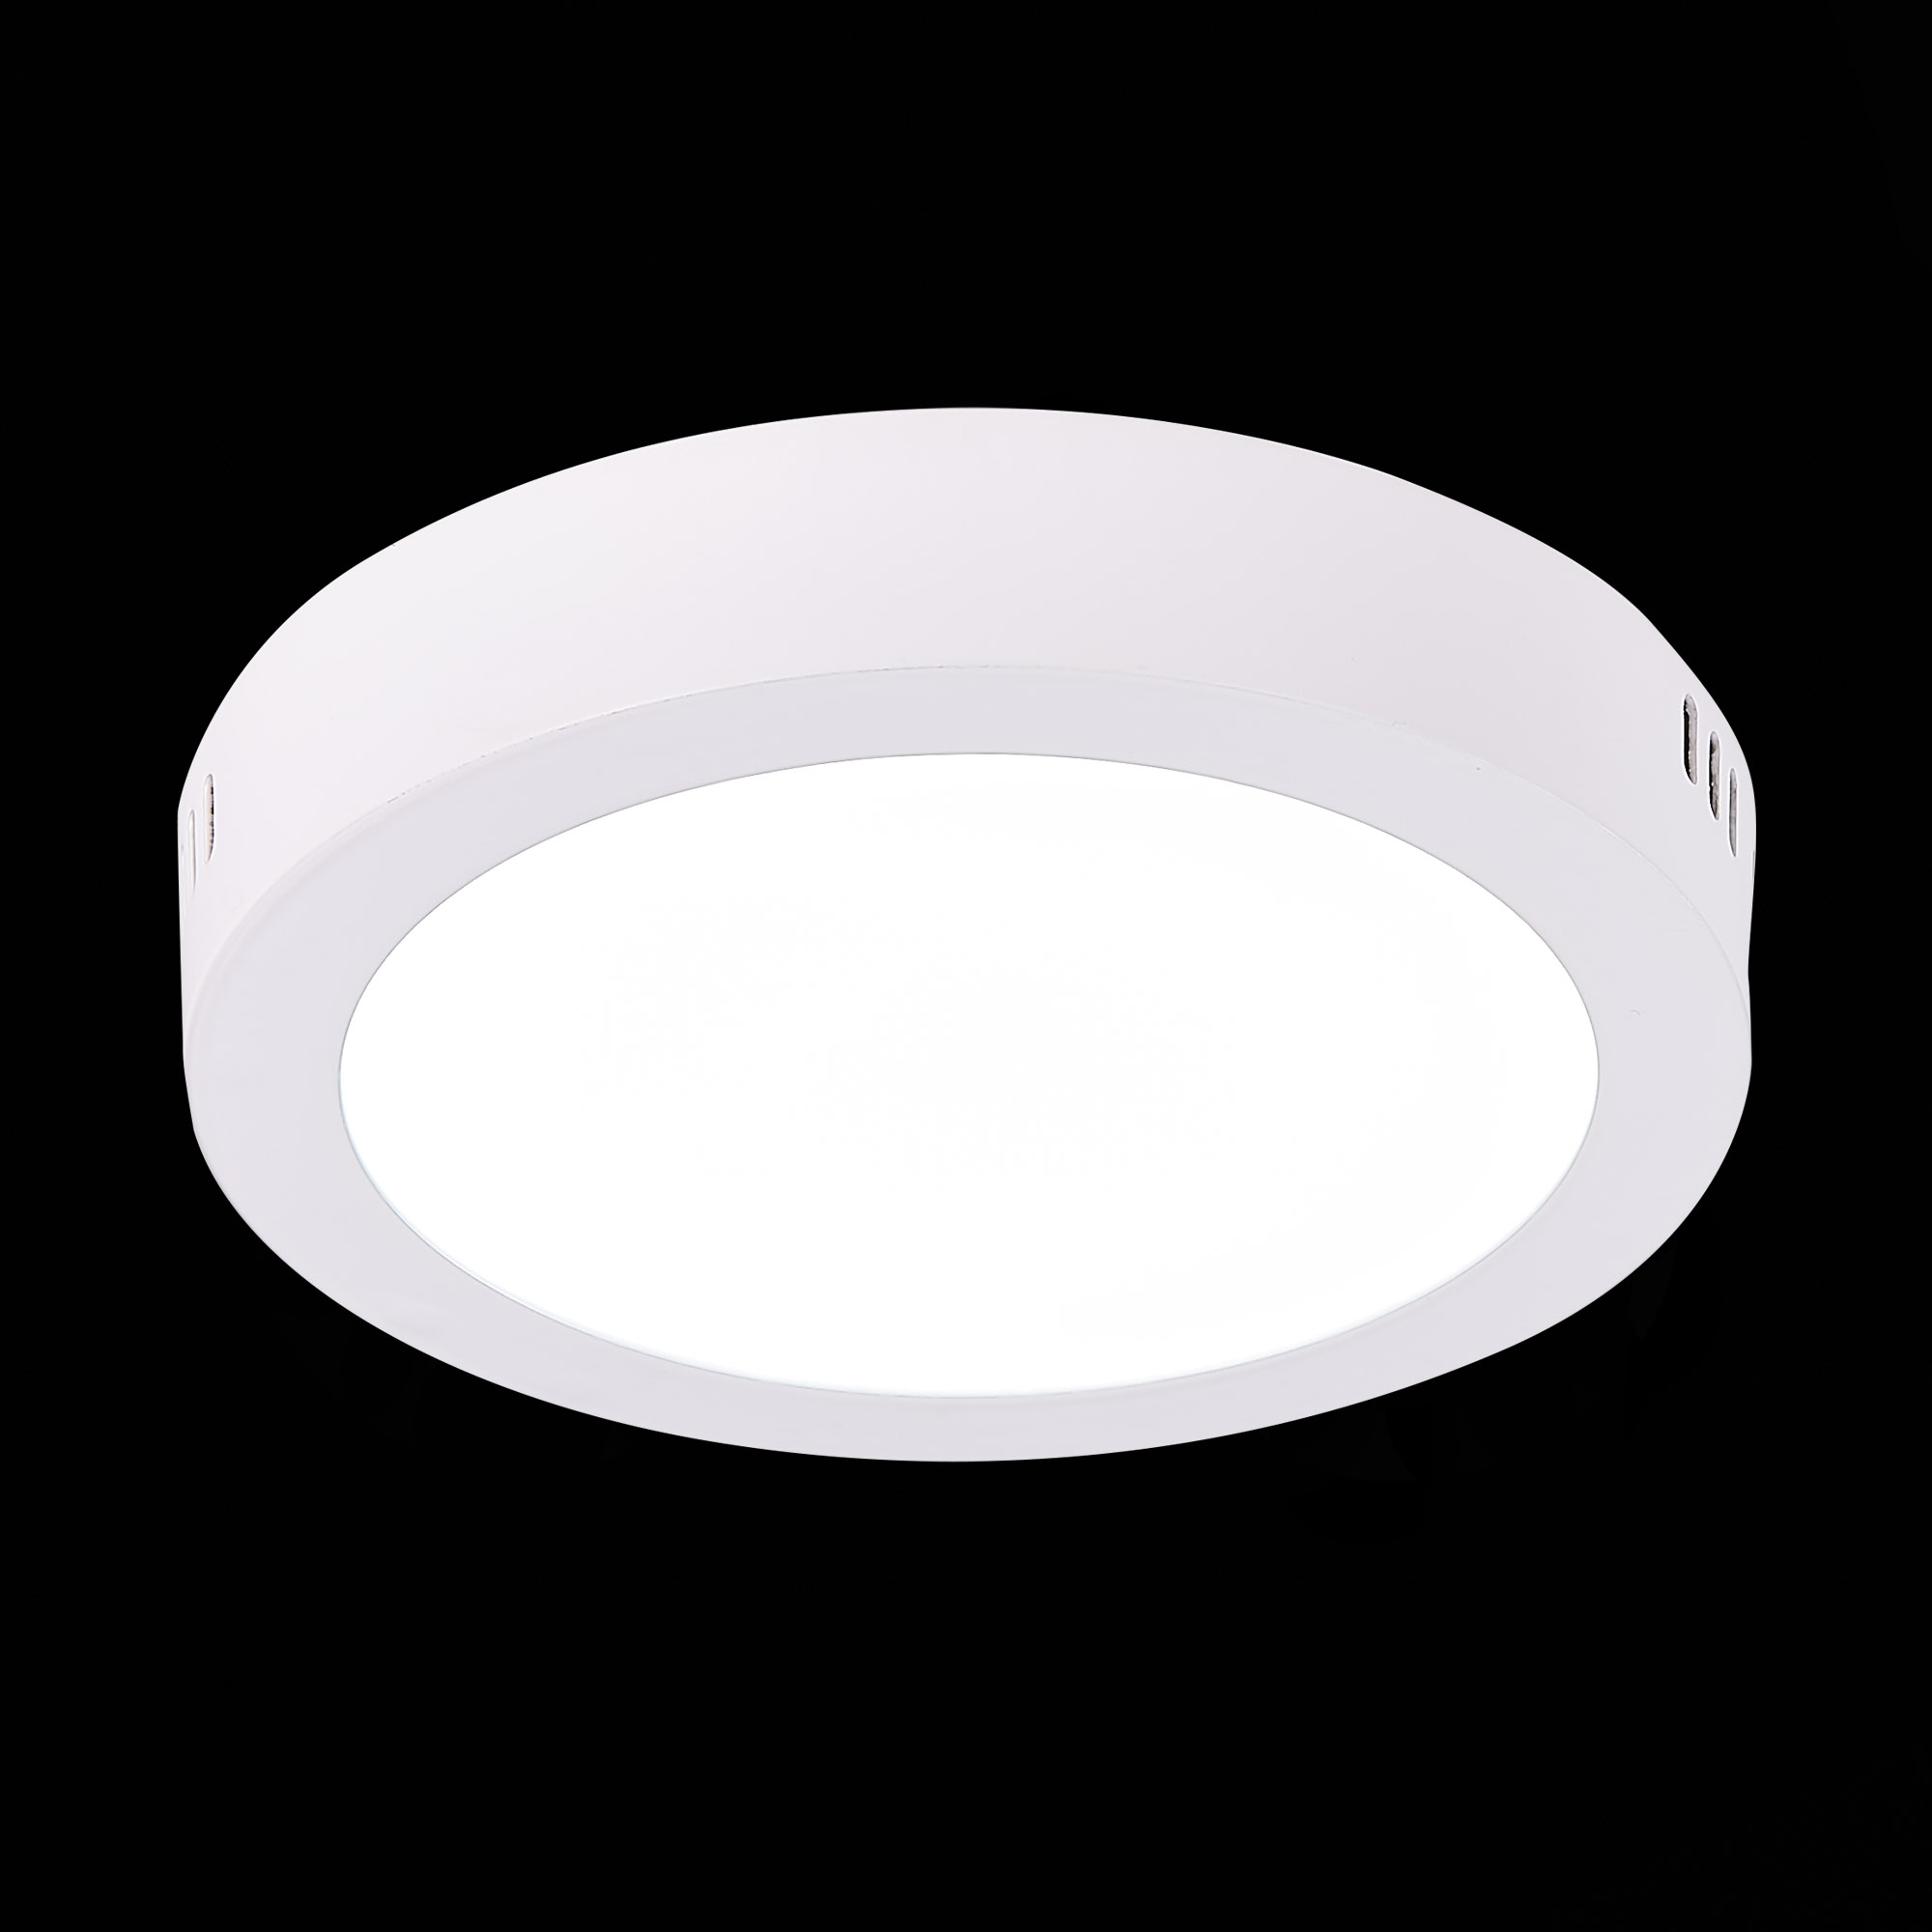 светильник настенно-потолочный st luce st112.532.12, артикул ST112.532.12